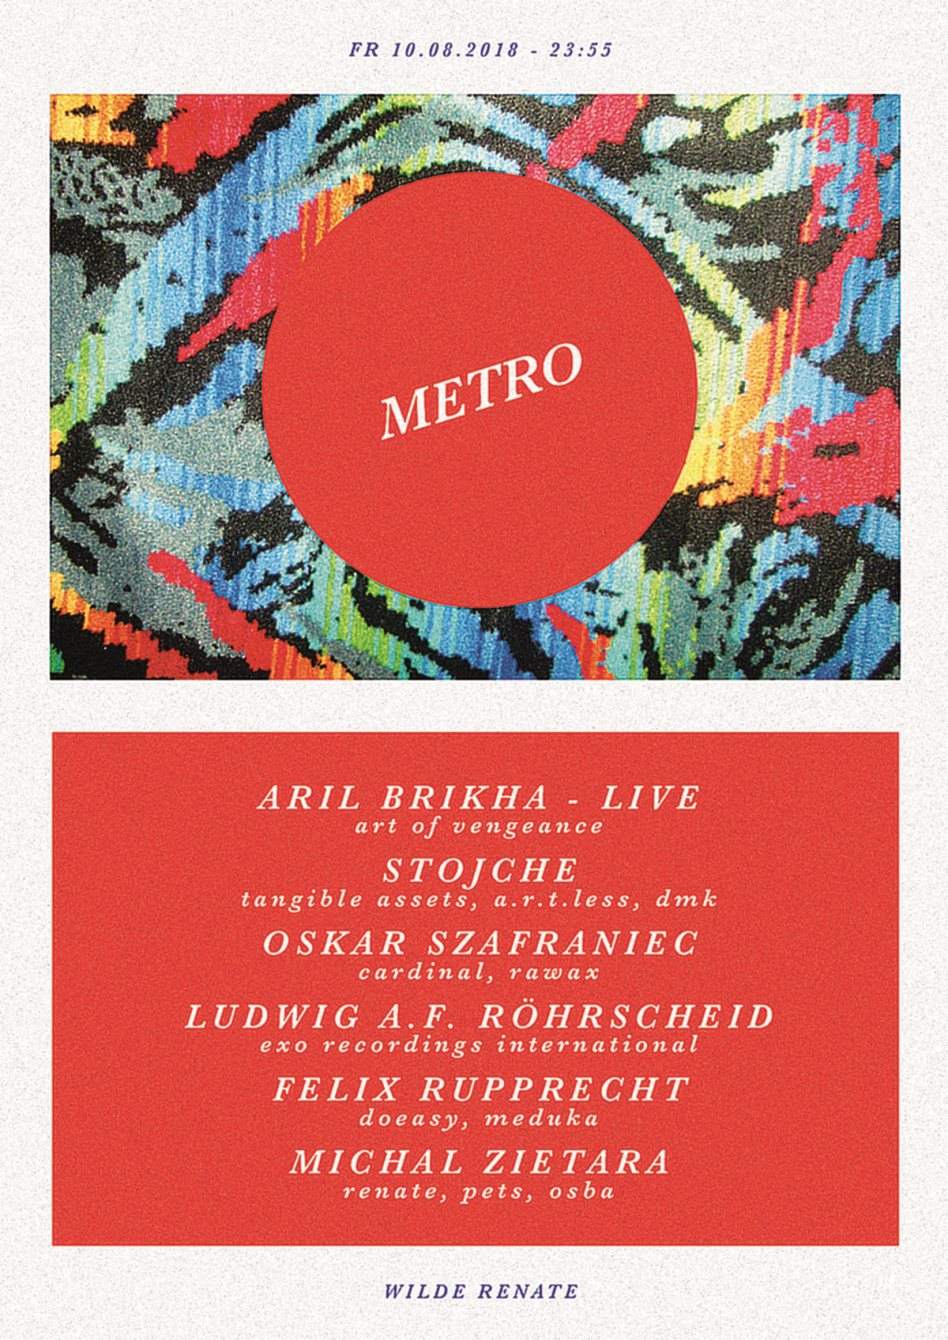 Metro /w. Aril Brikha, Stojche, Oskar Szafraniec, Ludwig A.F. Röhrscheid, Felix Rupprecht - フライヤー表